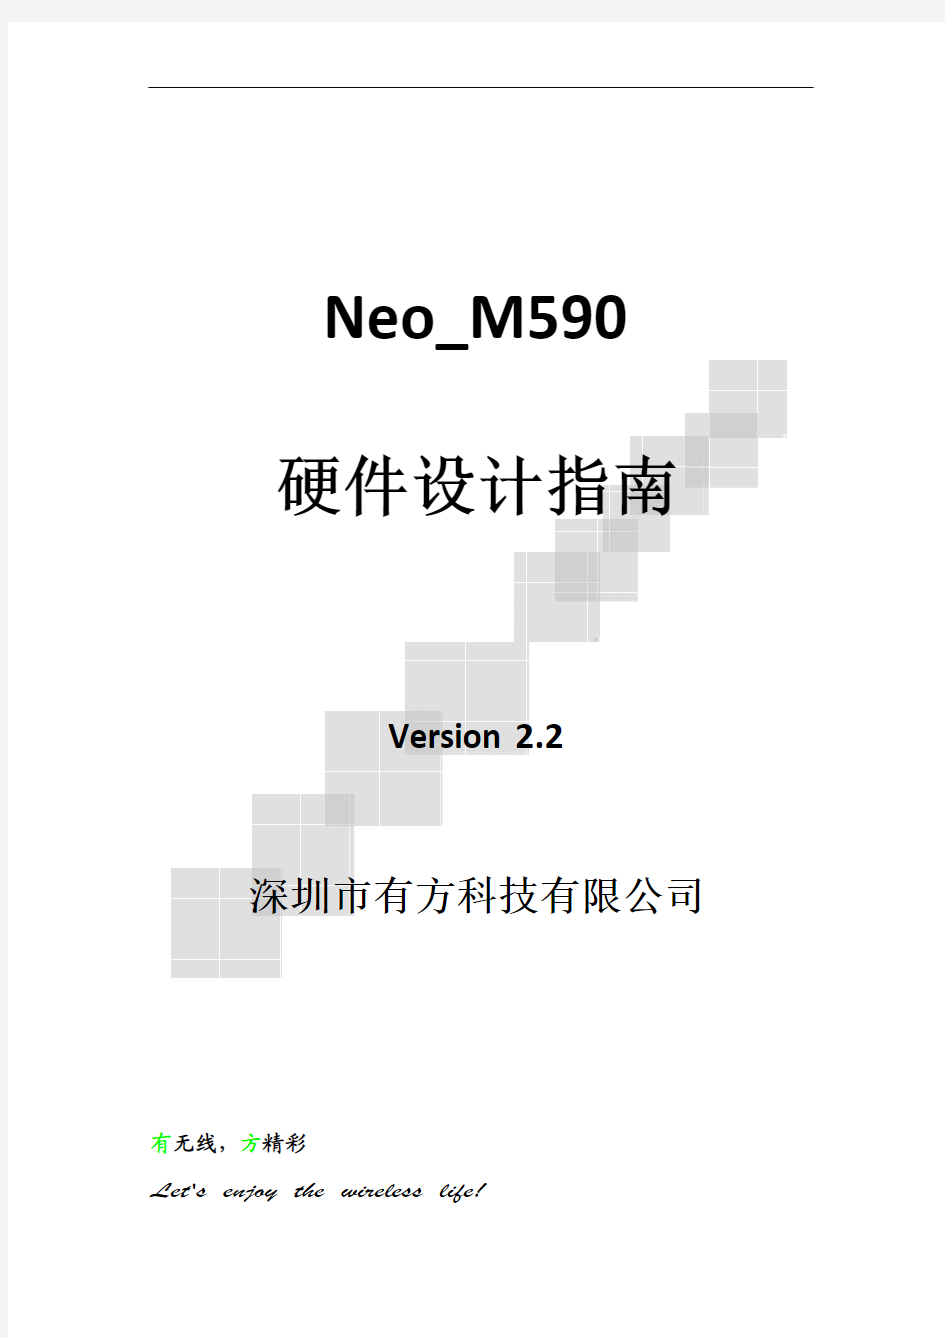 Neo_M590模块硬件设计指南V2.2